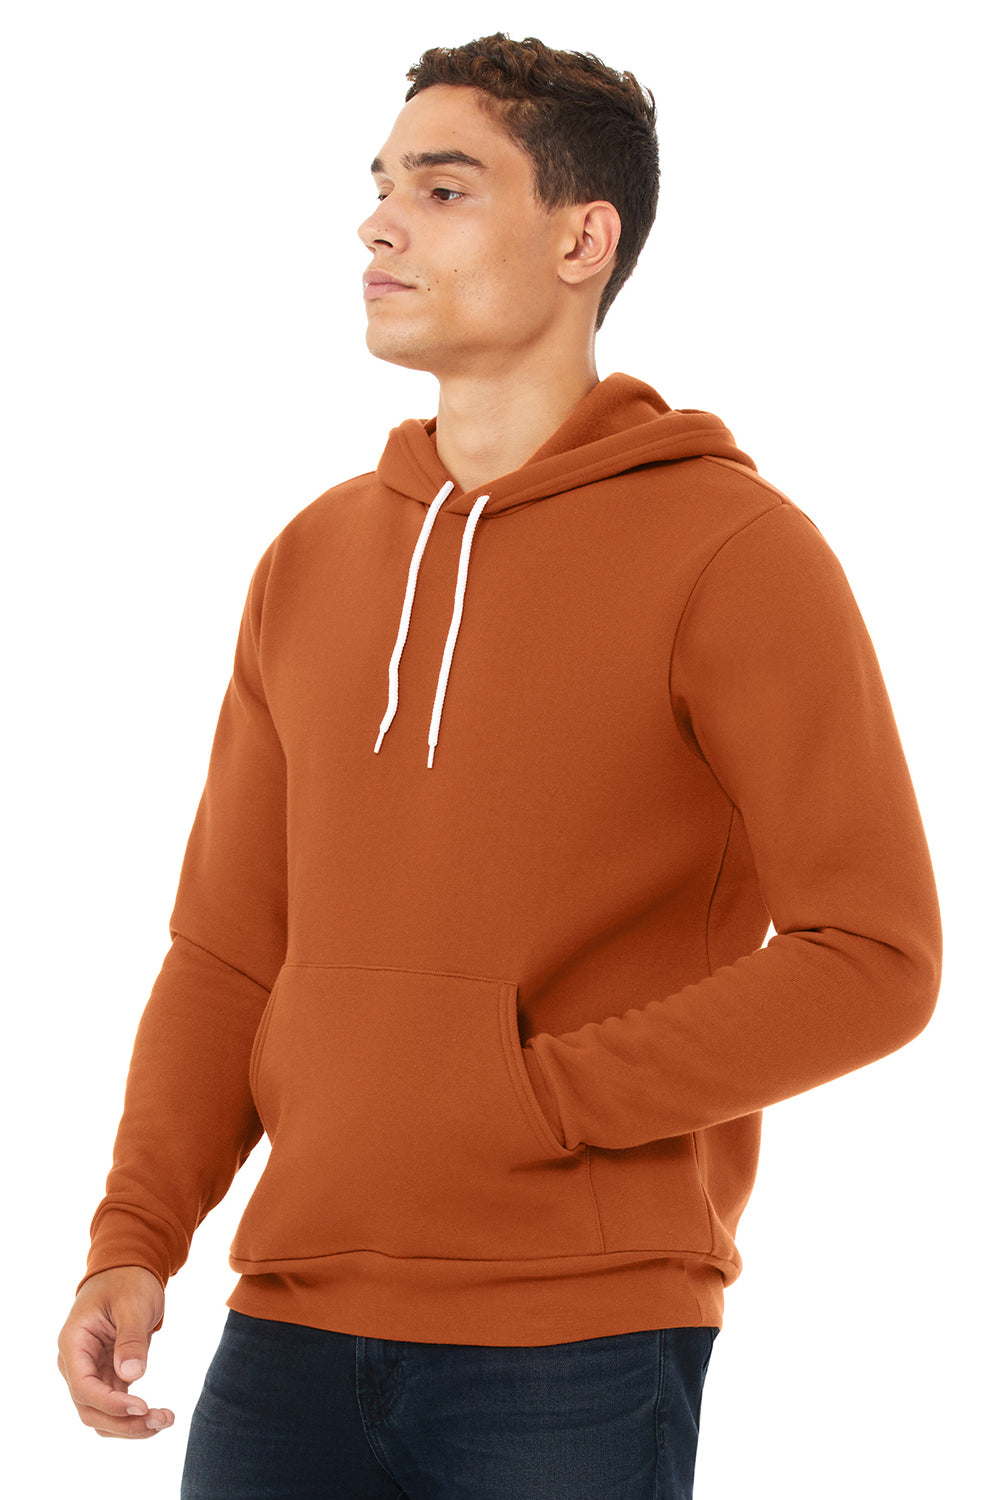 Bella + Canvas BC3719/3719 Mens Sponge Fleece Hooded Sweatshirt Hoodie Autumn Orange Model 3Q